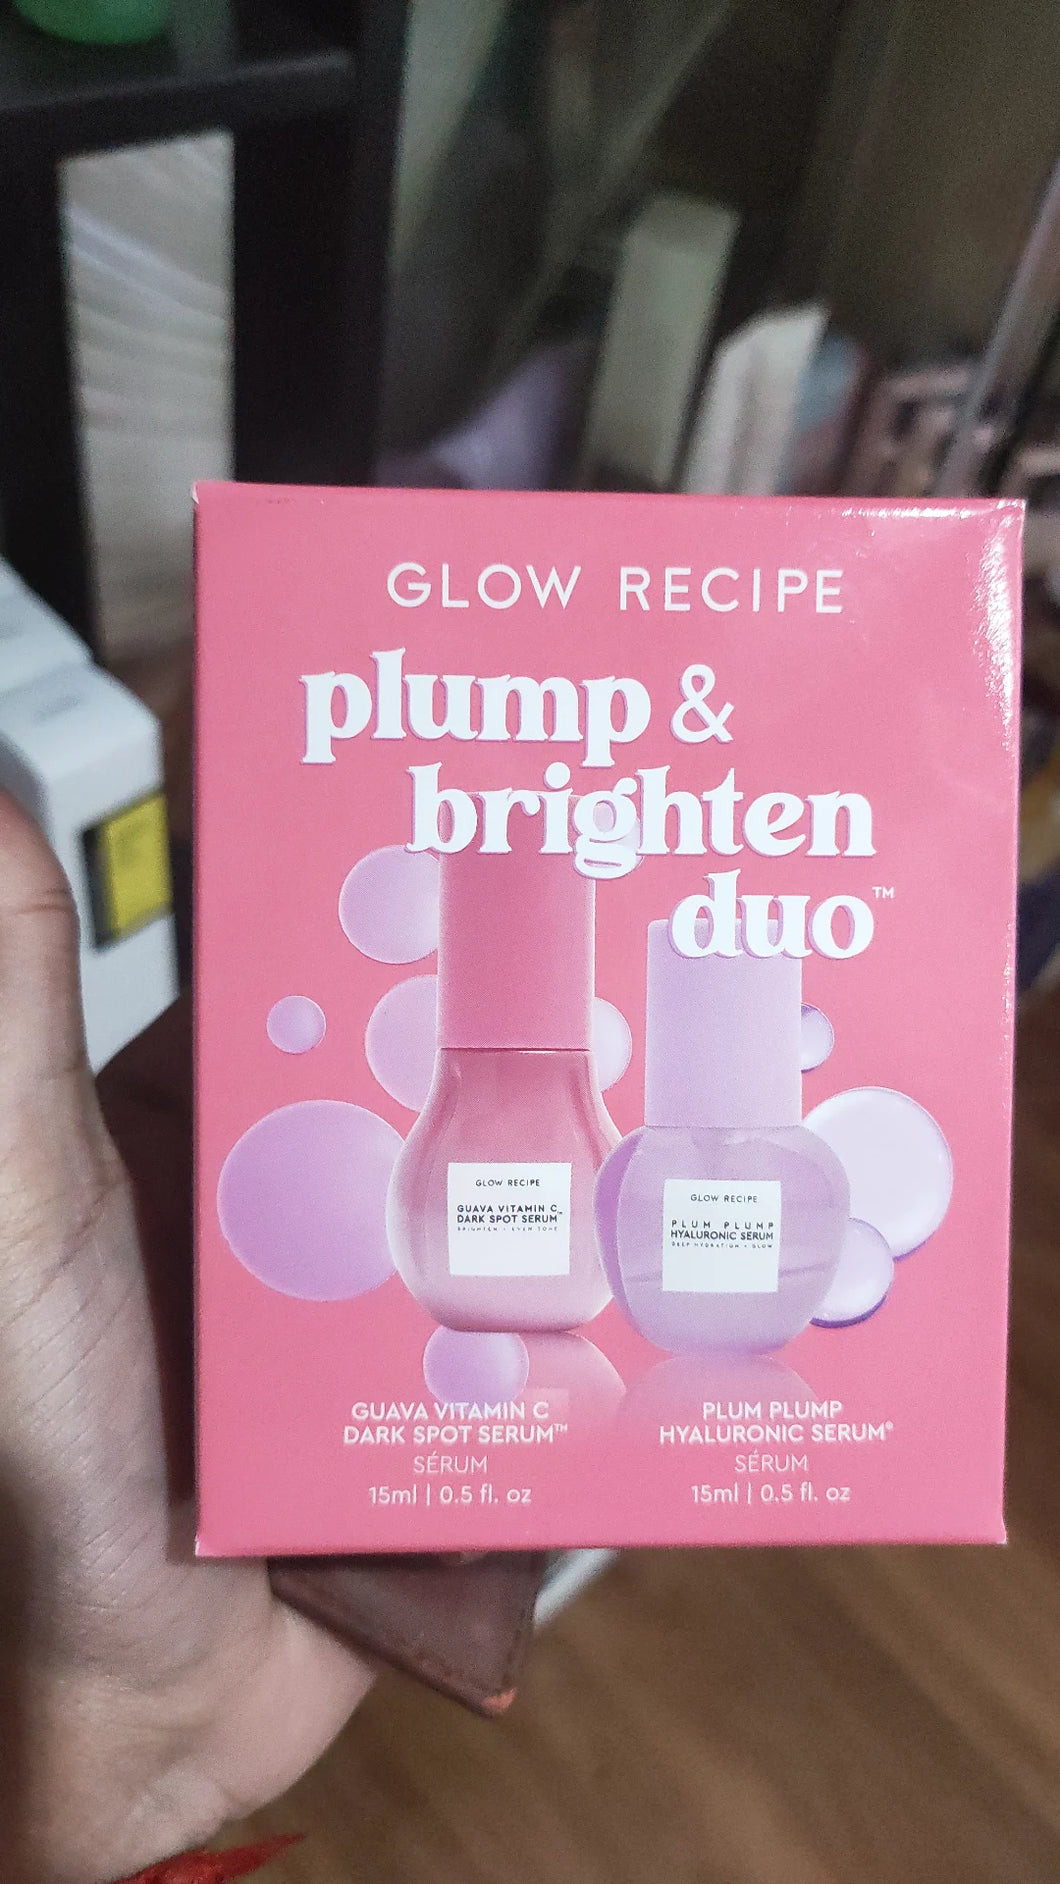 Plump and brighten duo